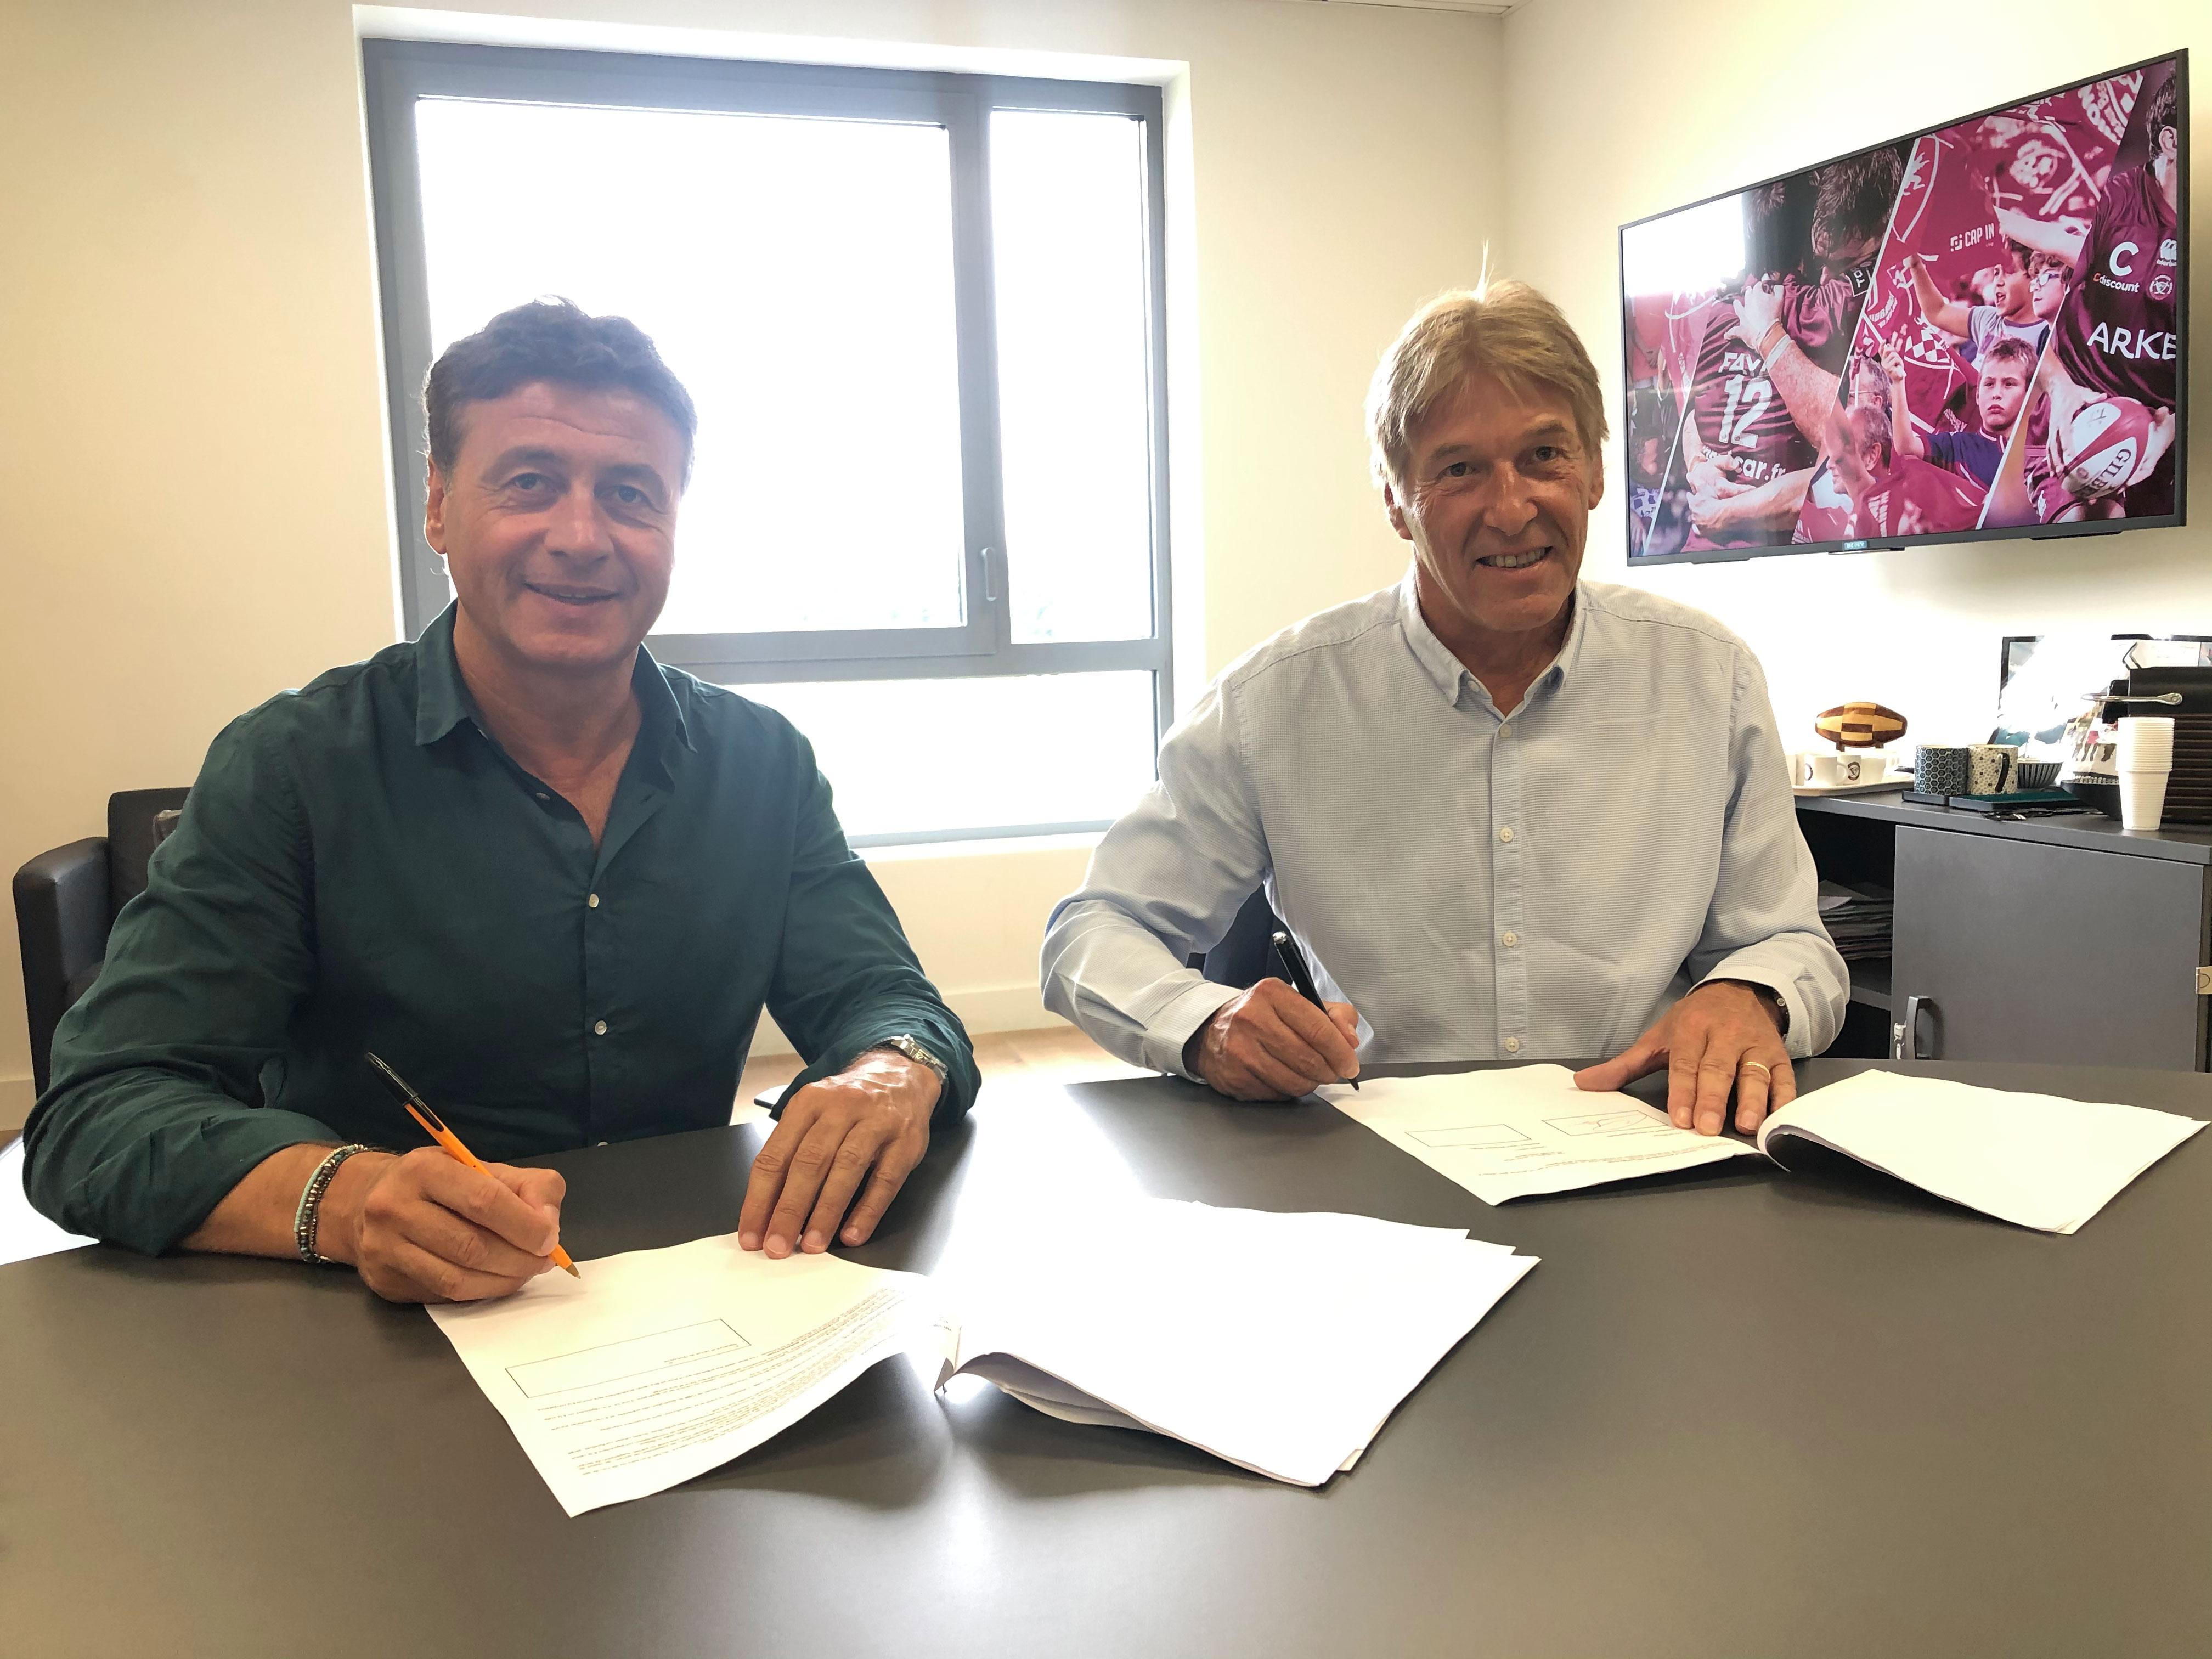 Edenauto - partenaire maillot UBB - signature Laurent Marti et Eric Stierlen président du directoire Edenauto